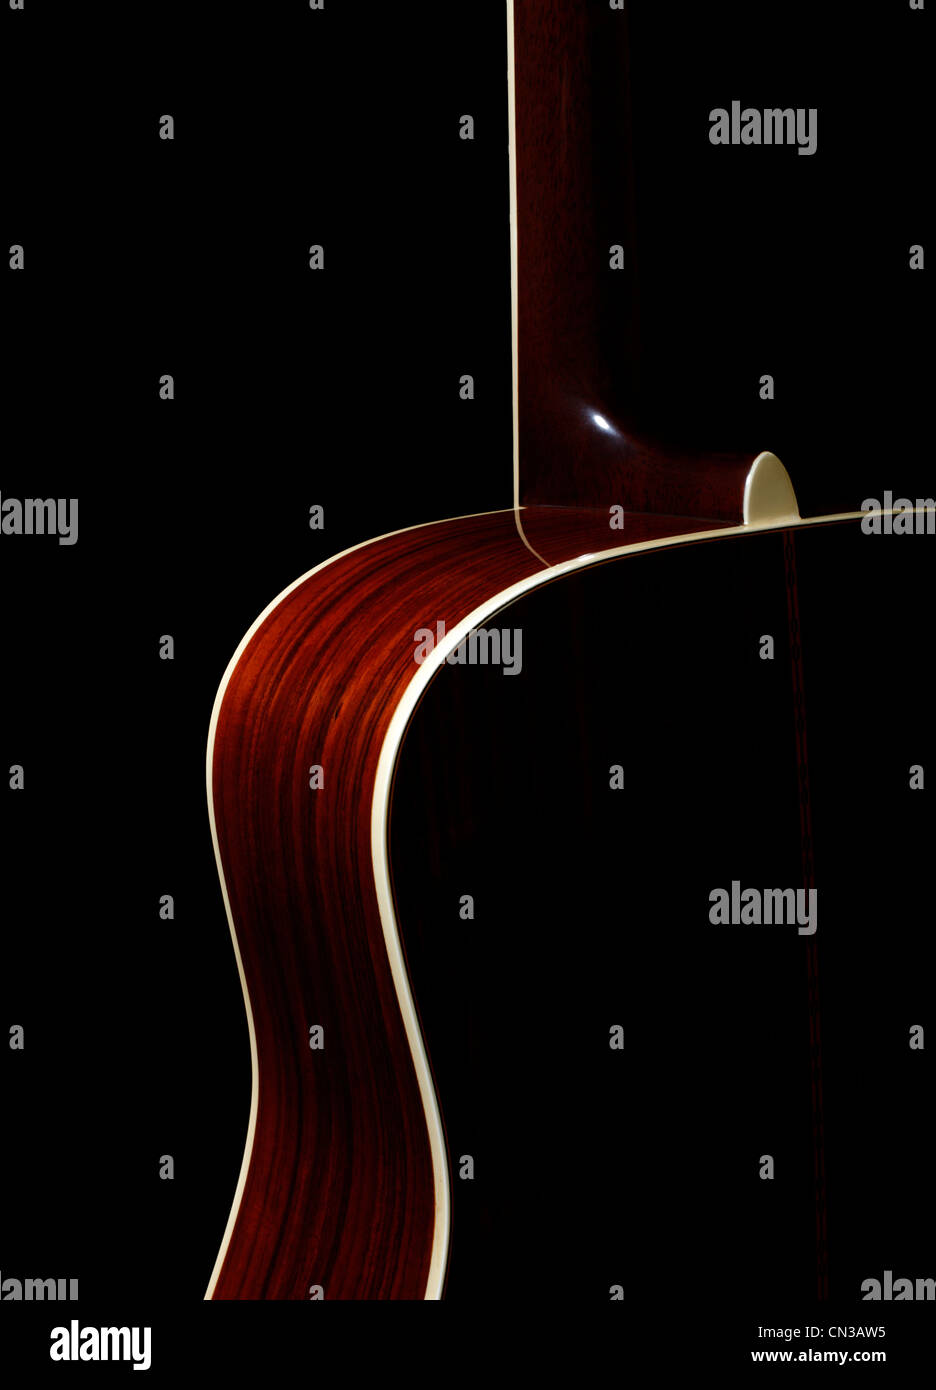 Acoustic guitar against black background Stock Photo